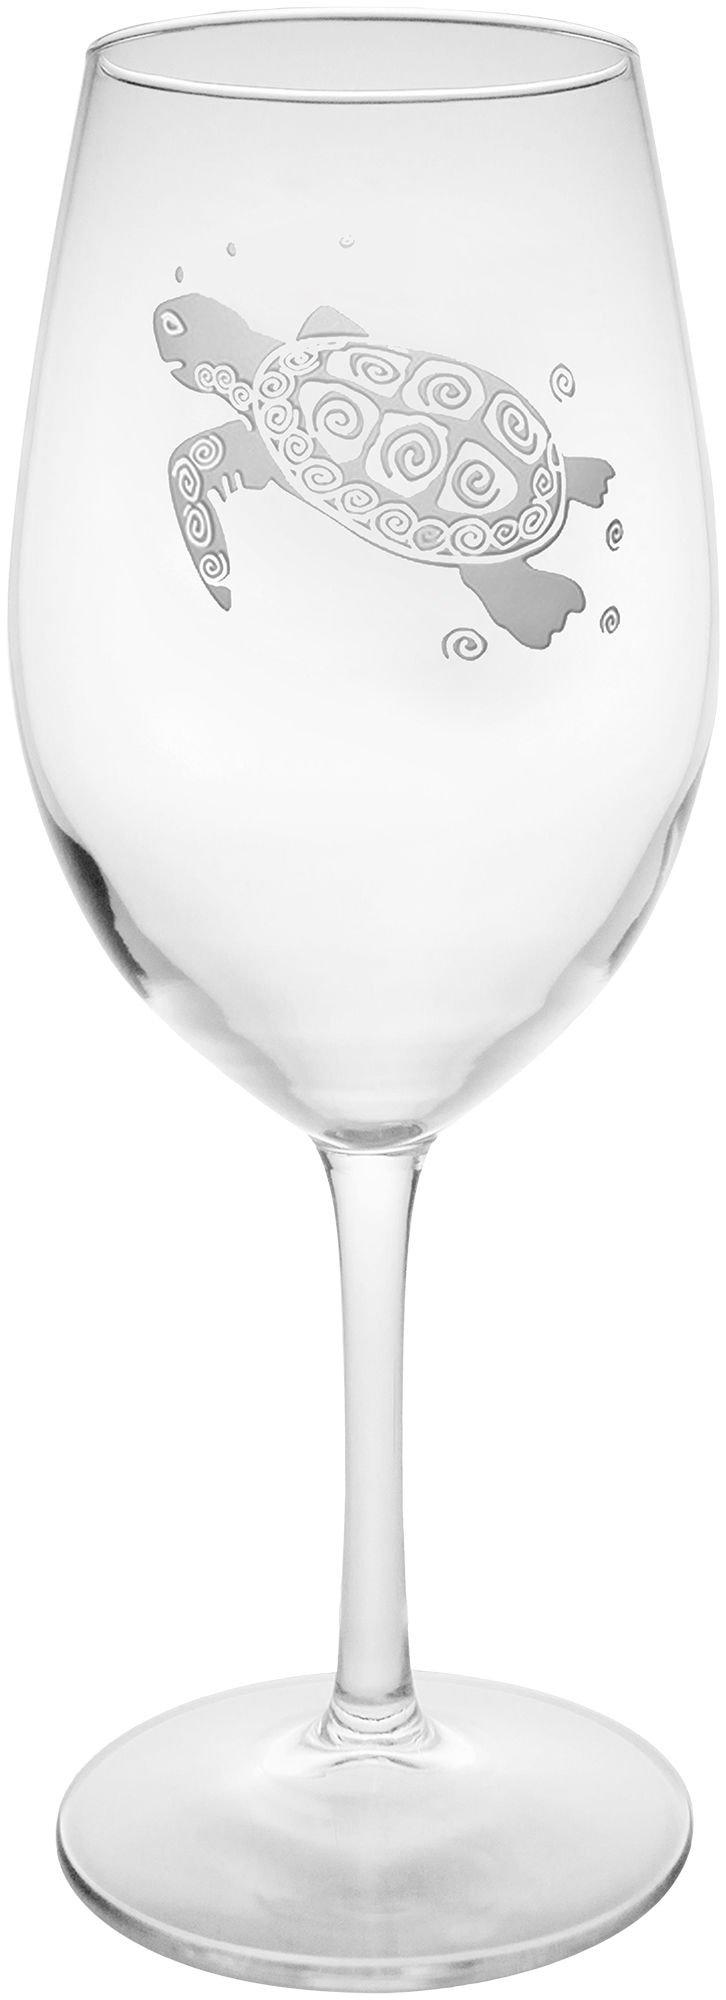 Rolf Glass 18 oz. Sea Turtle Wine Goblet